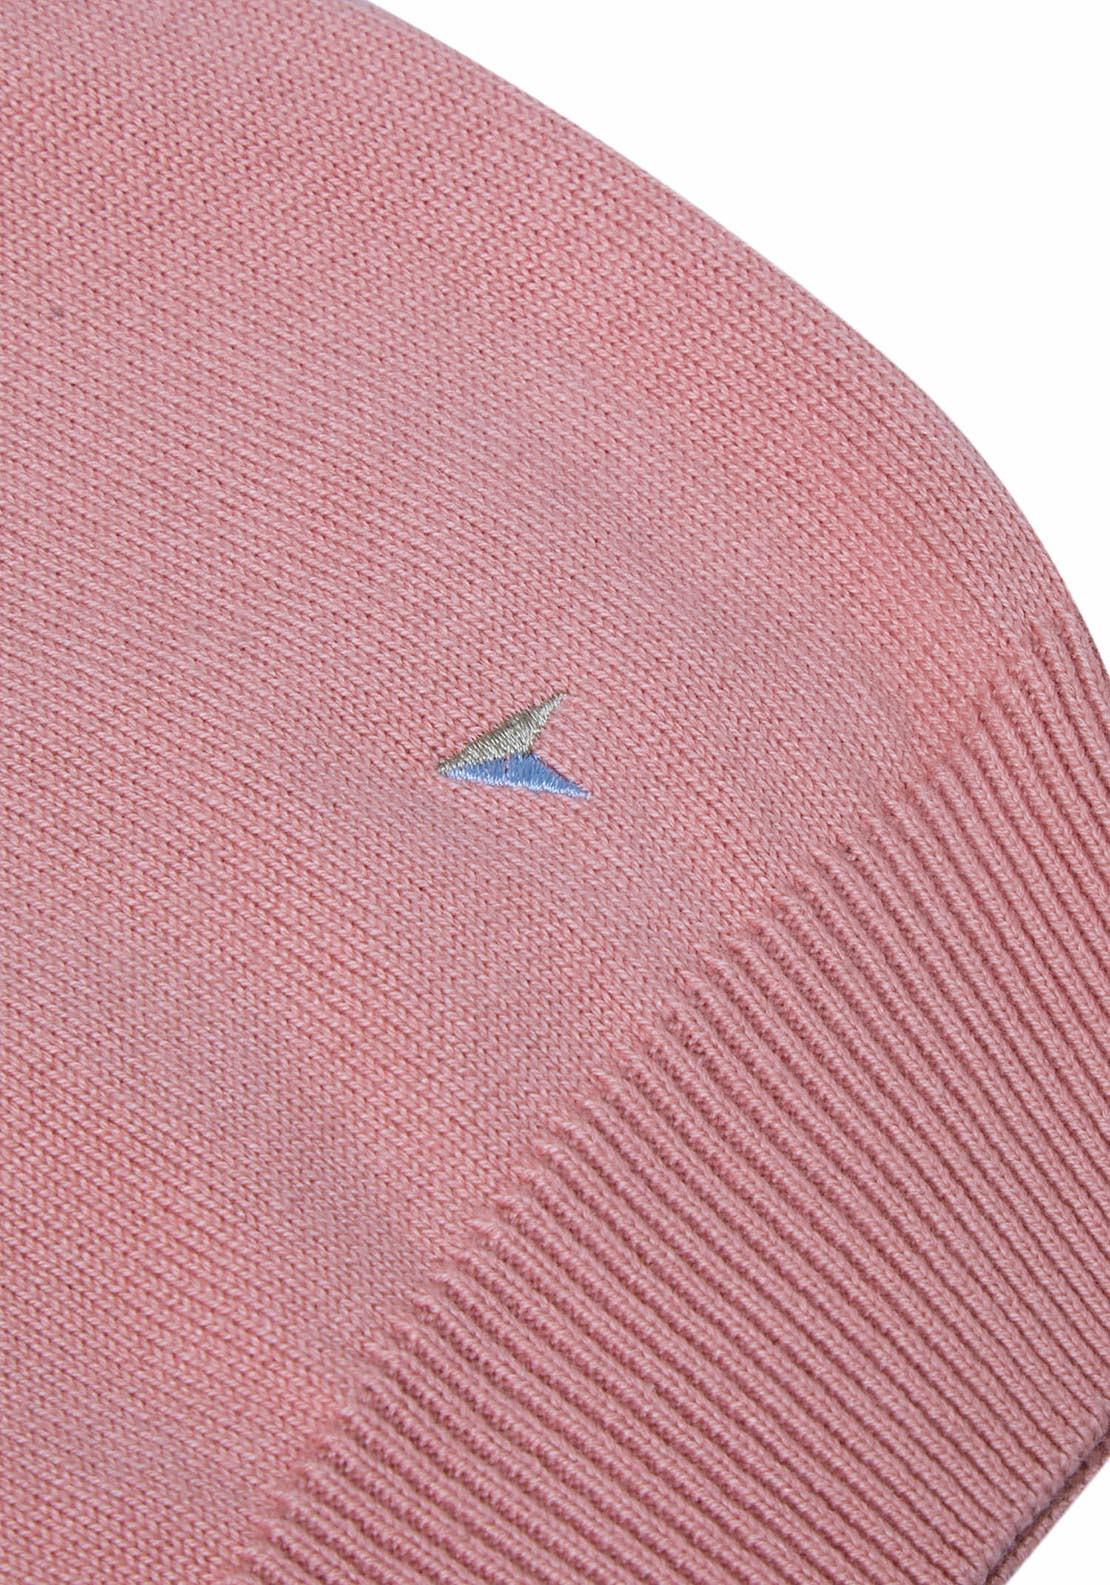 Drifter V Neck Cotton Knitwear - Pink 2 Shaws Department Stores